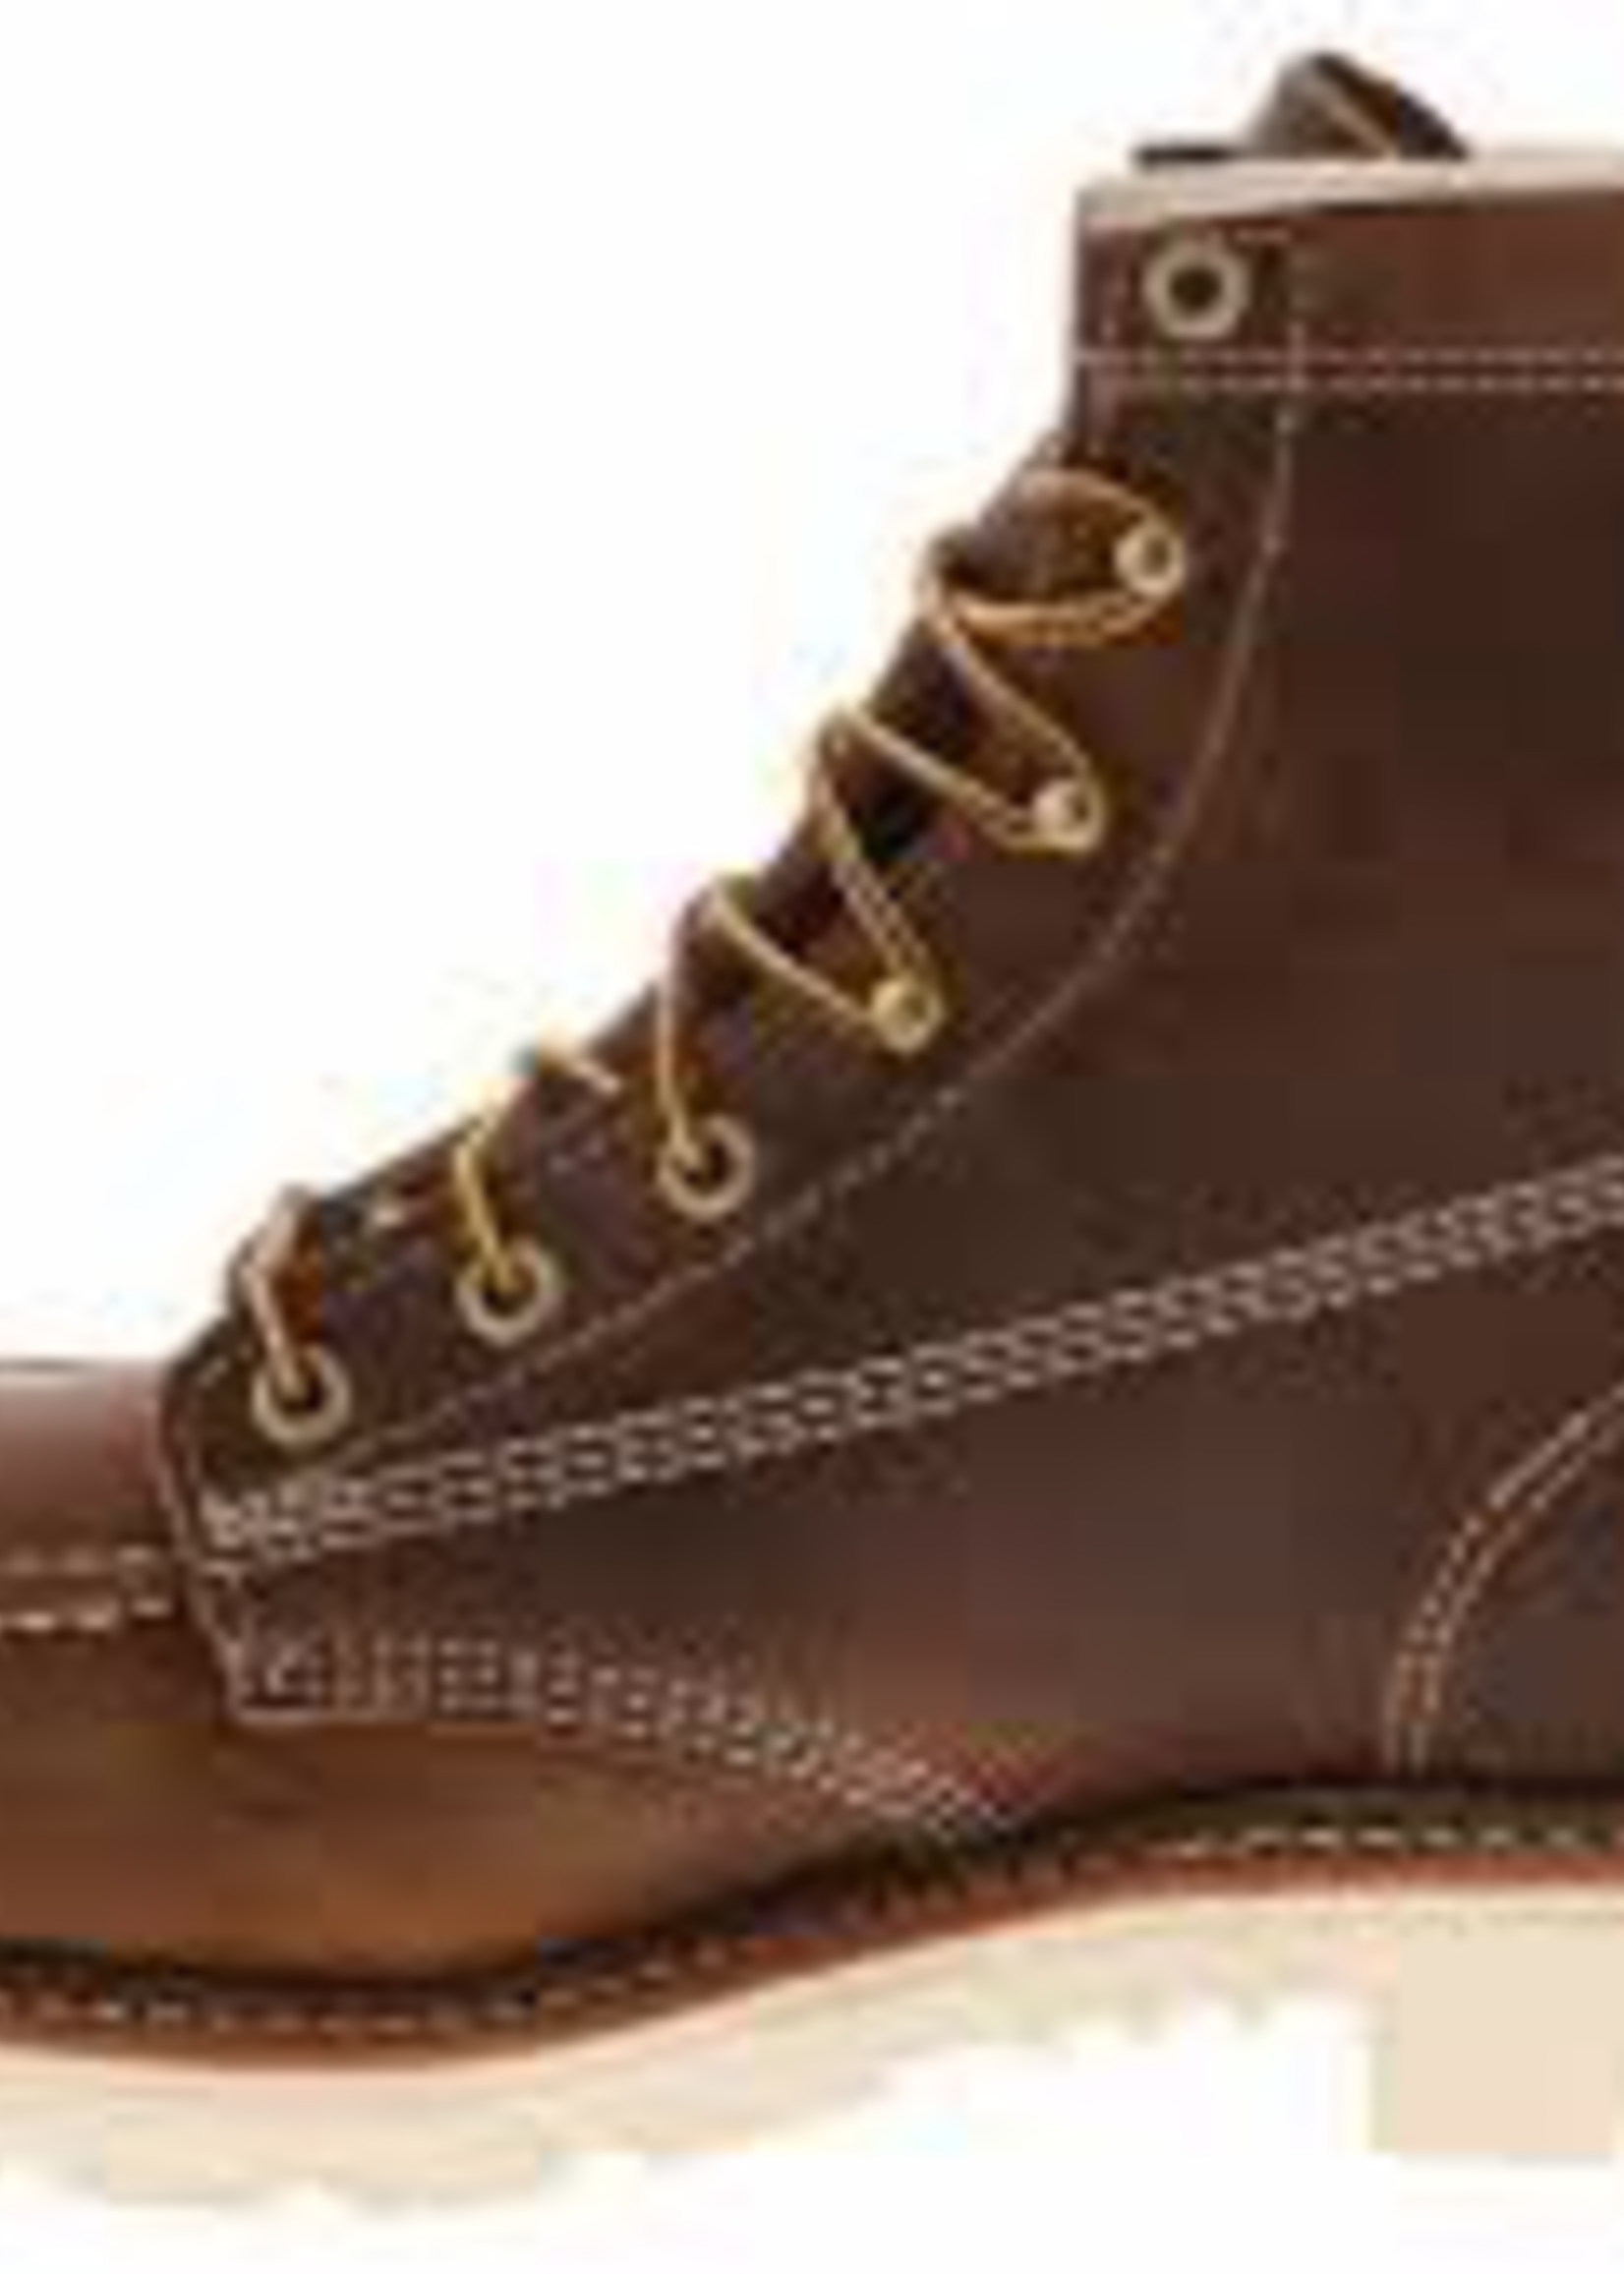 Boots-Men THOROGOOD 804-4375  6" Safety Moc Toe